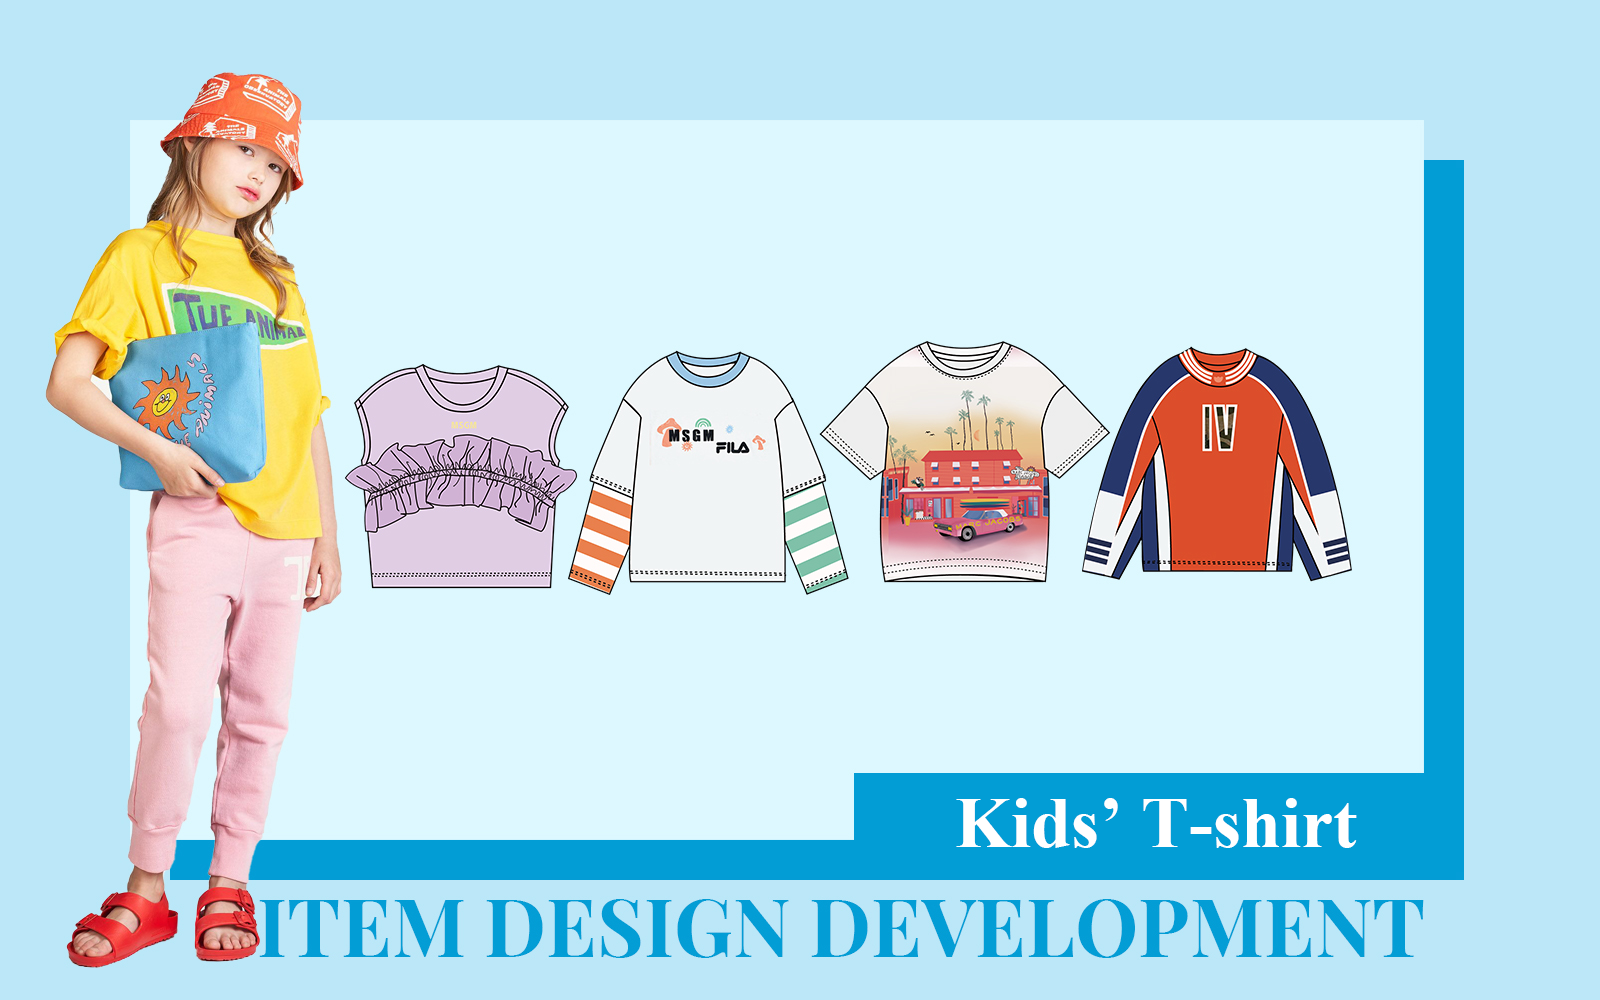 The Design Development of Kids' T-shirt